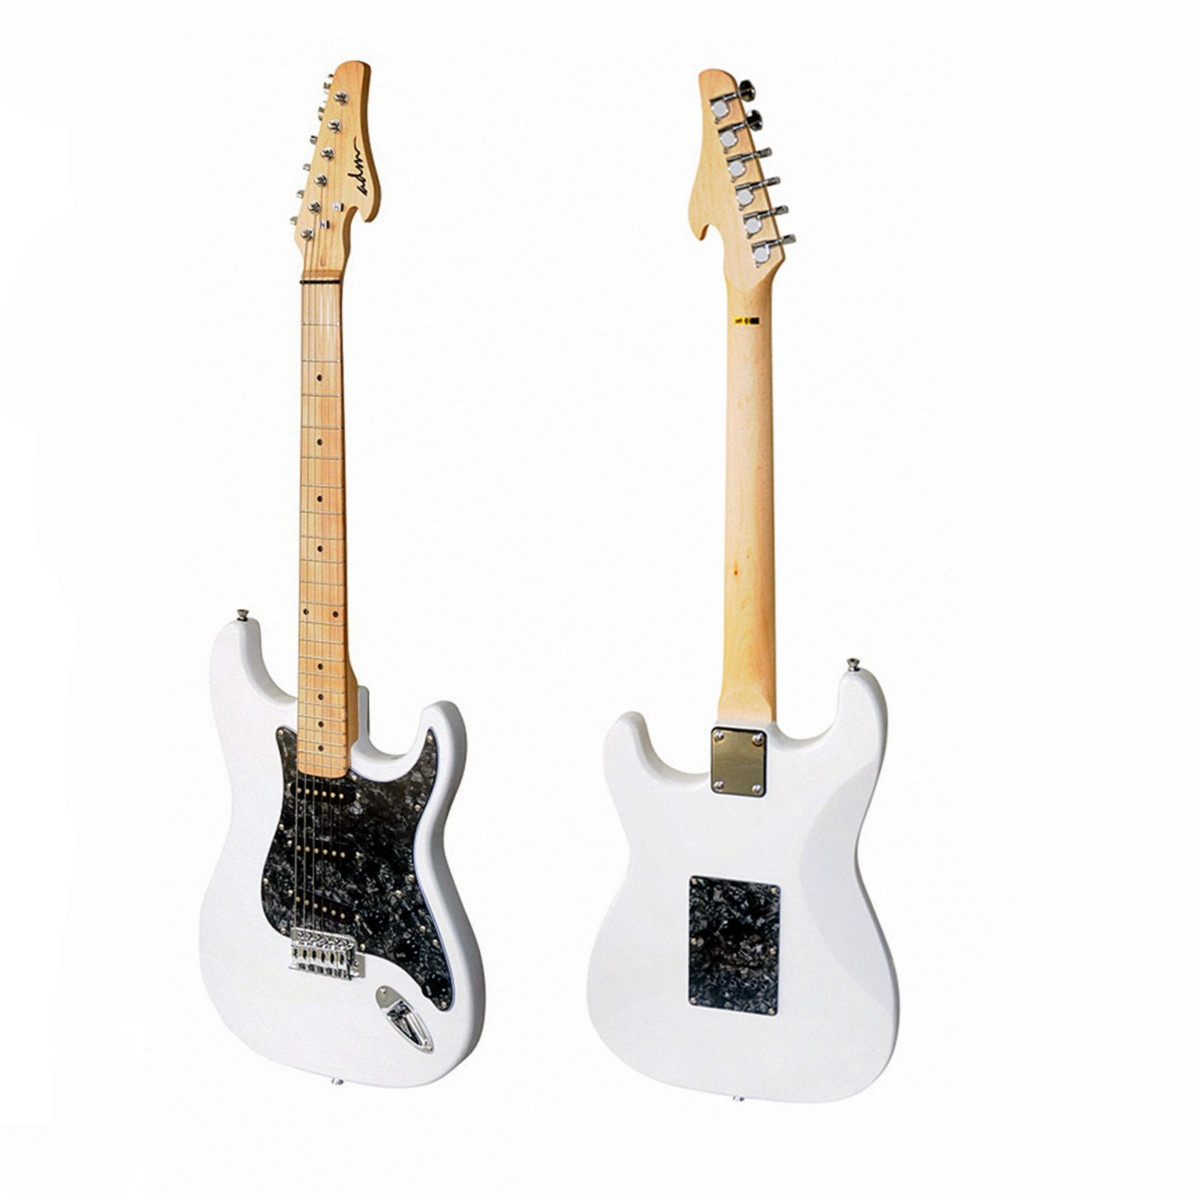 Kit de guitarra eléctrica de madera maciza adecuado para principiantes (EGS111-10S)